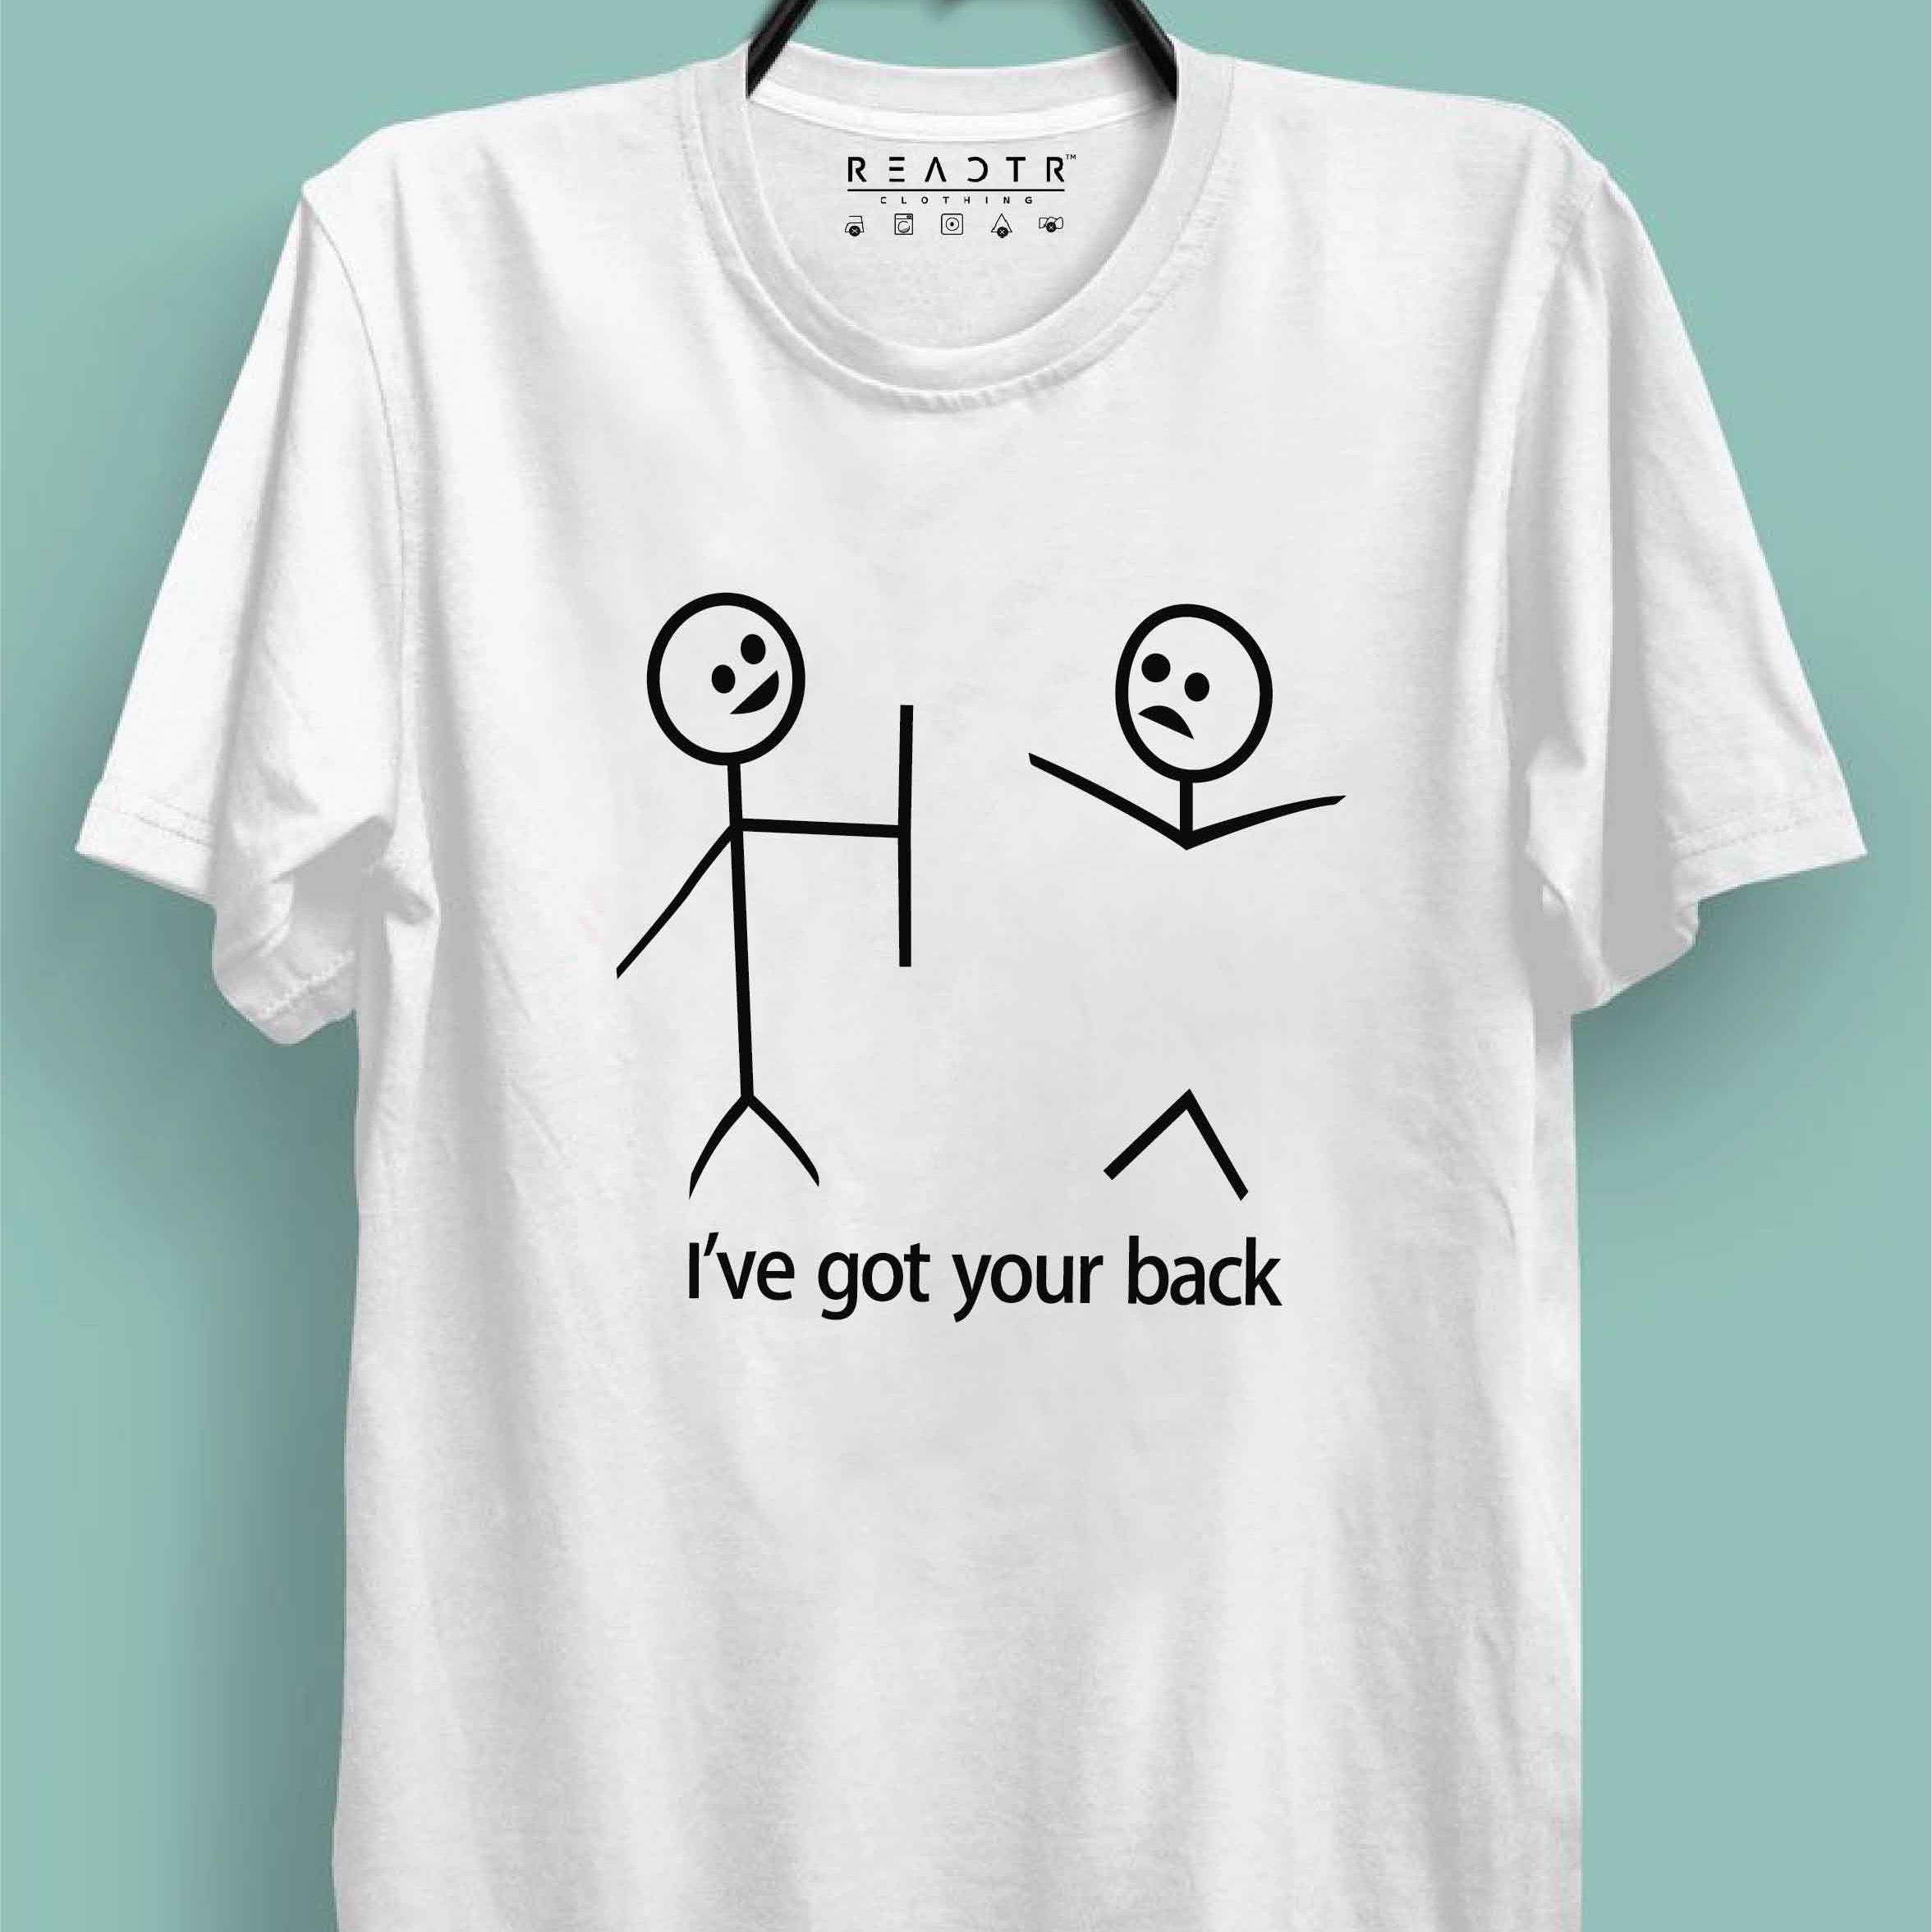 I've got your back Reactr Tshirts For Men - Eyewearlabs